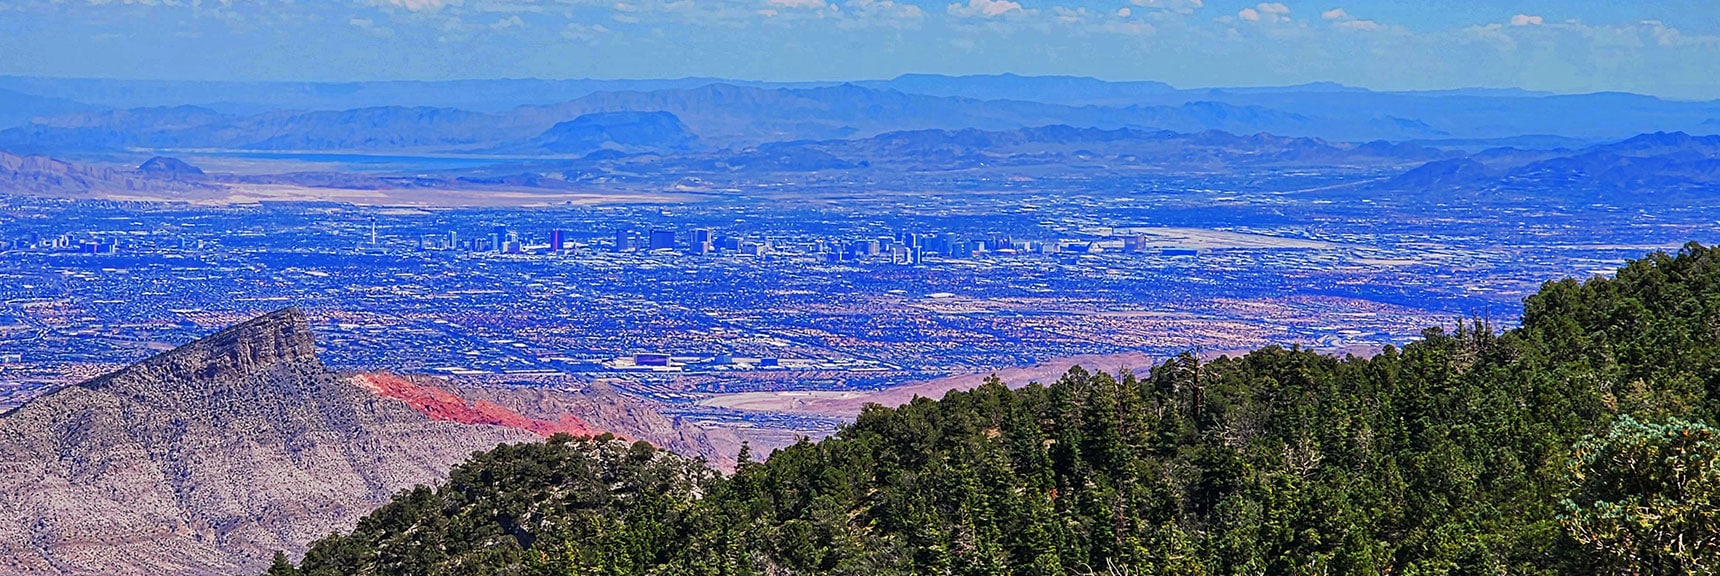 Large View of Las Vegas Strip, Lake Mead, Arizona Fortification Hill, Black Mts. & More. | Wilson Ridge Lower Loop | Lovell Canyon, Nevada